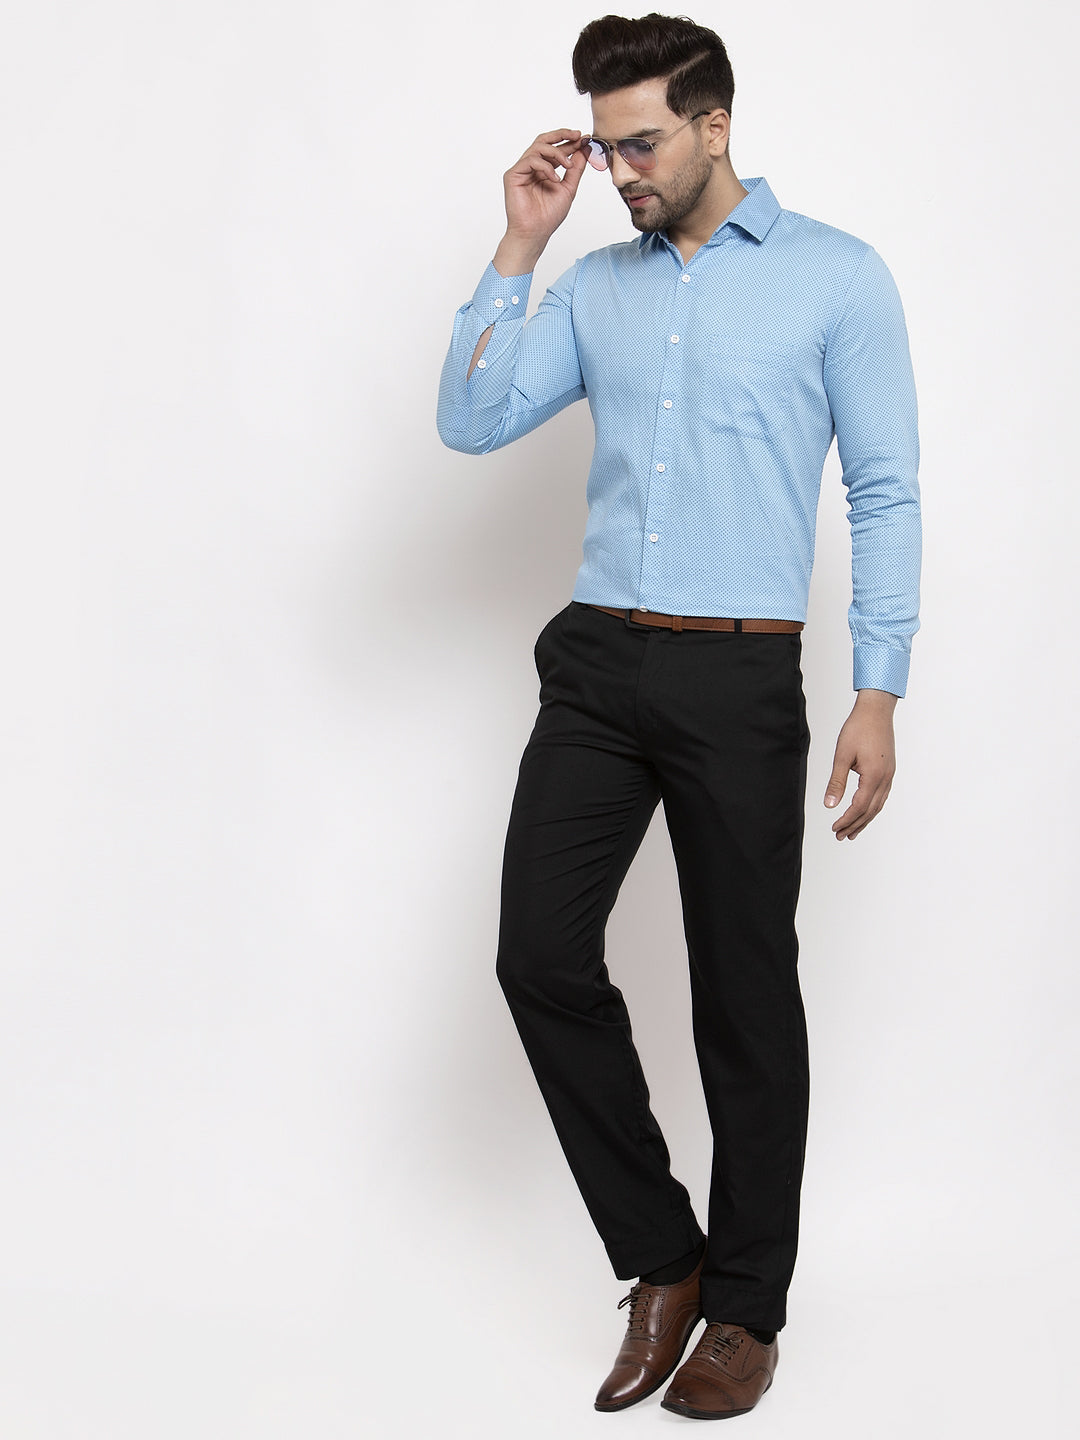 Men's Blue Cotton Polka Dots Formal Shirts ( SF 736Sky ) - Jainish